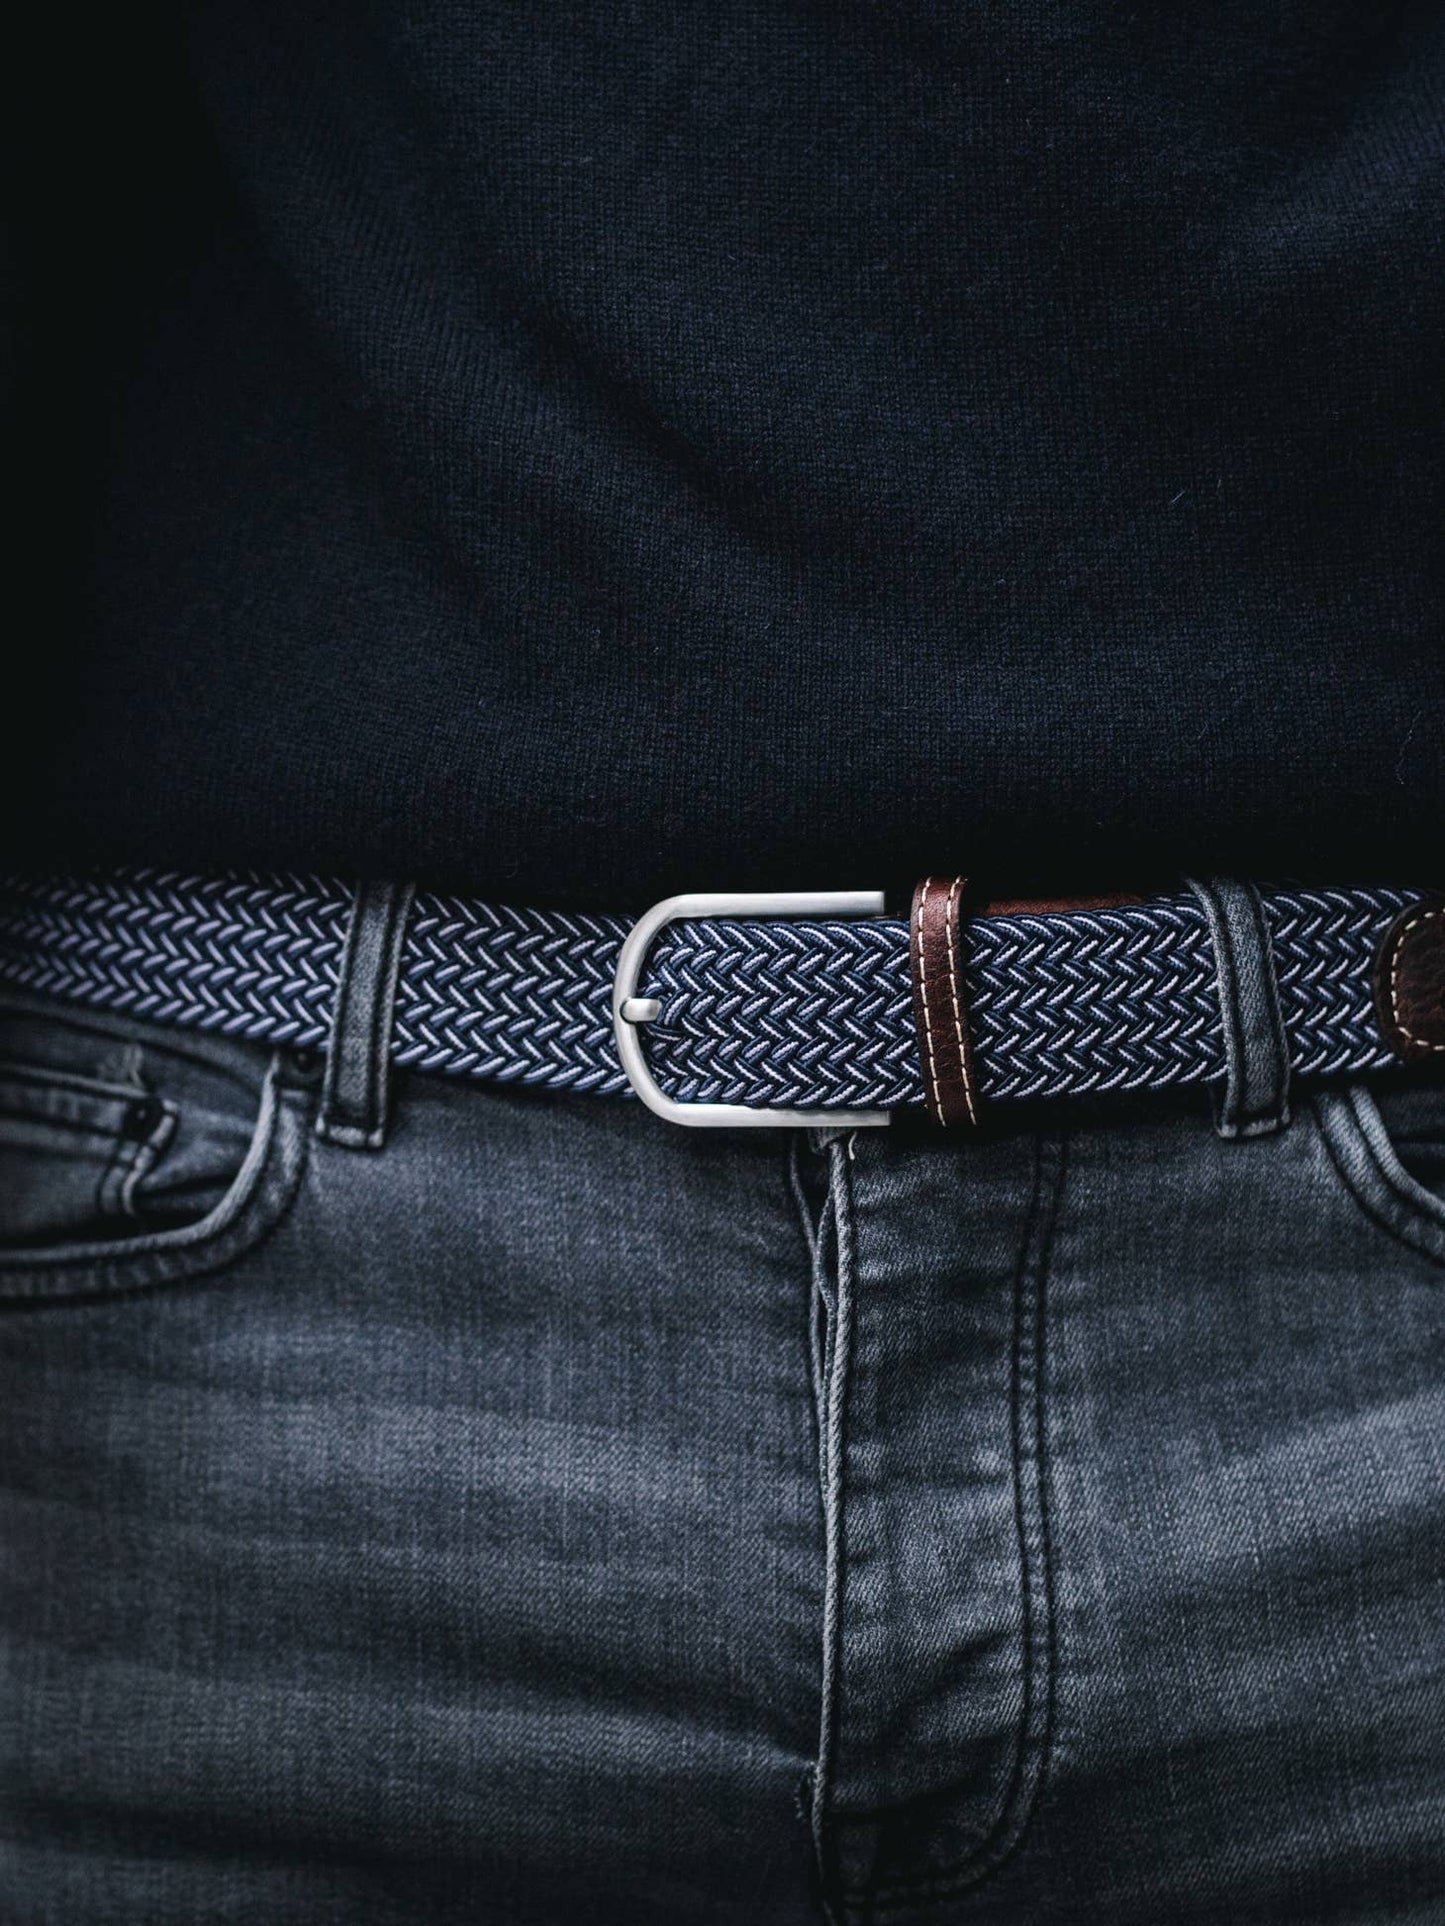 Woven Elastic Belt - Two Tone Blue - Size 1